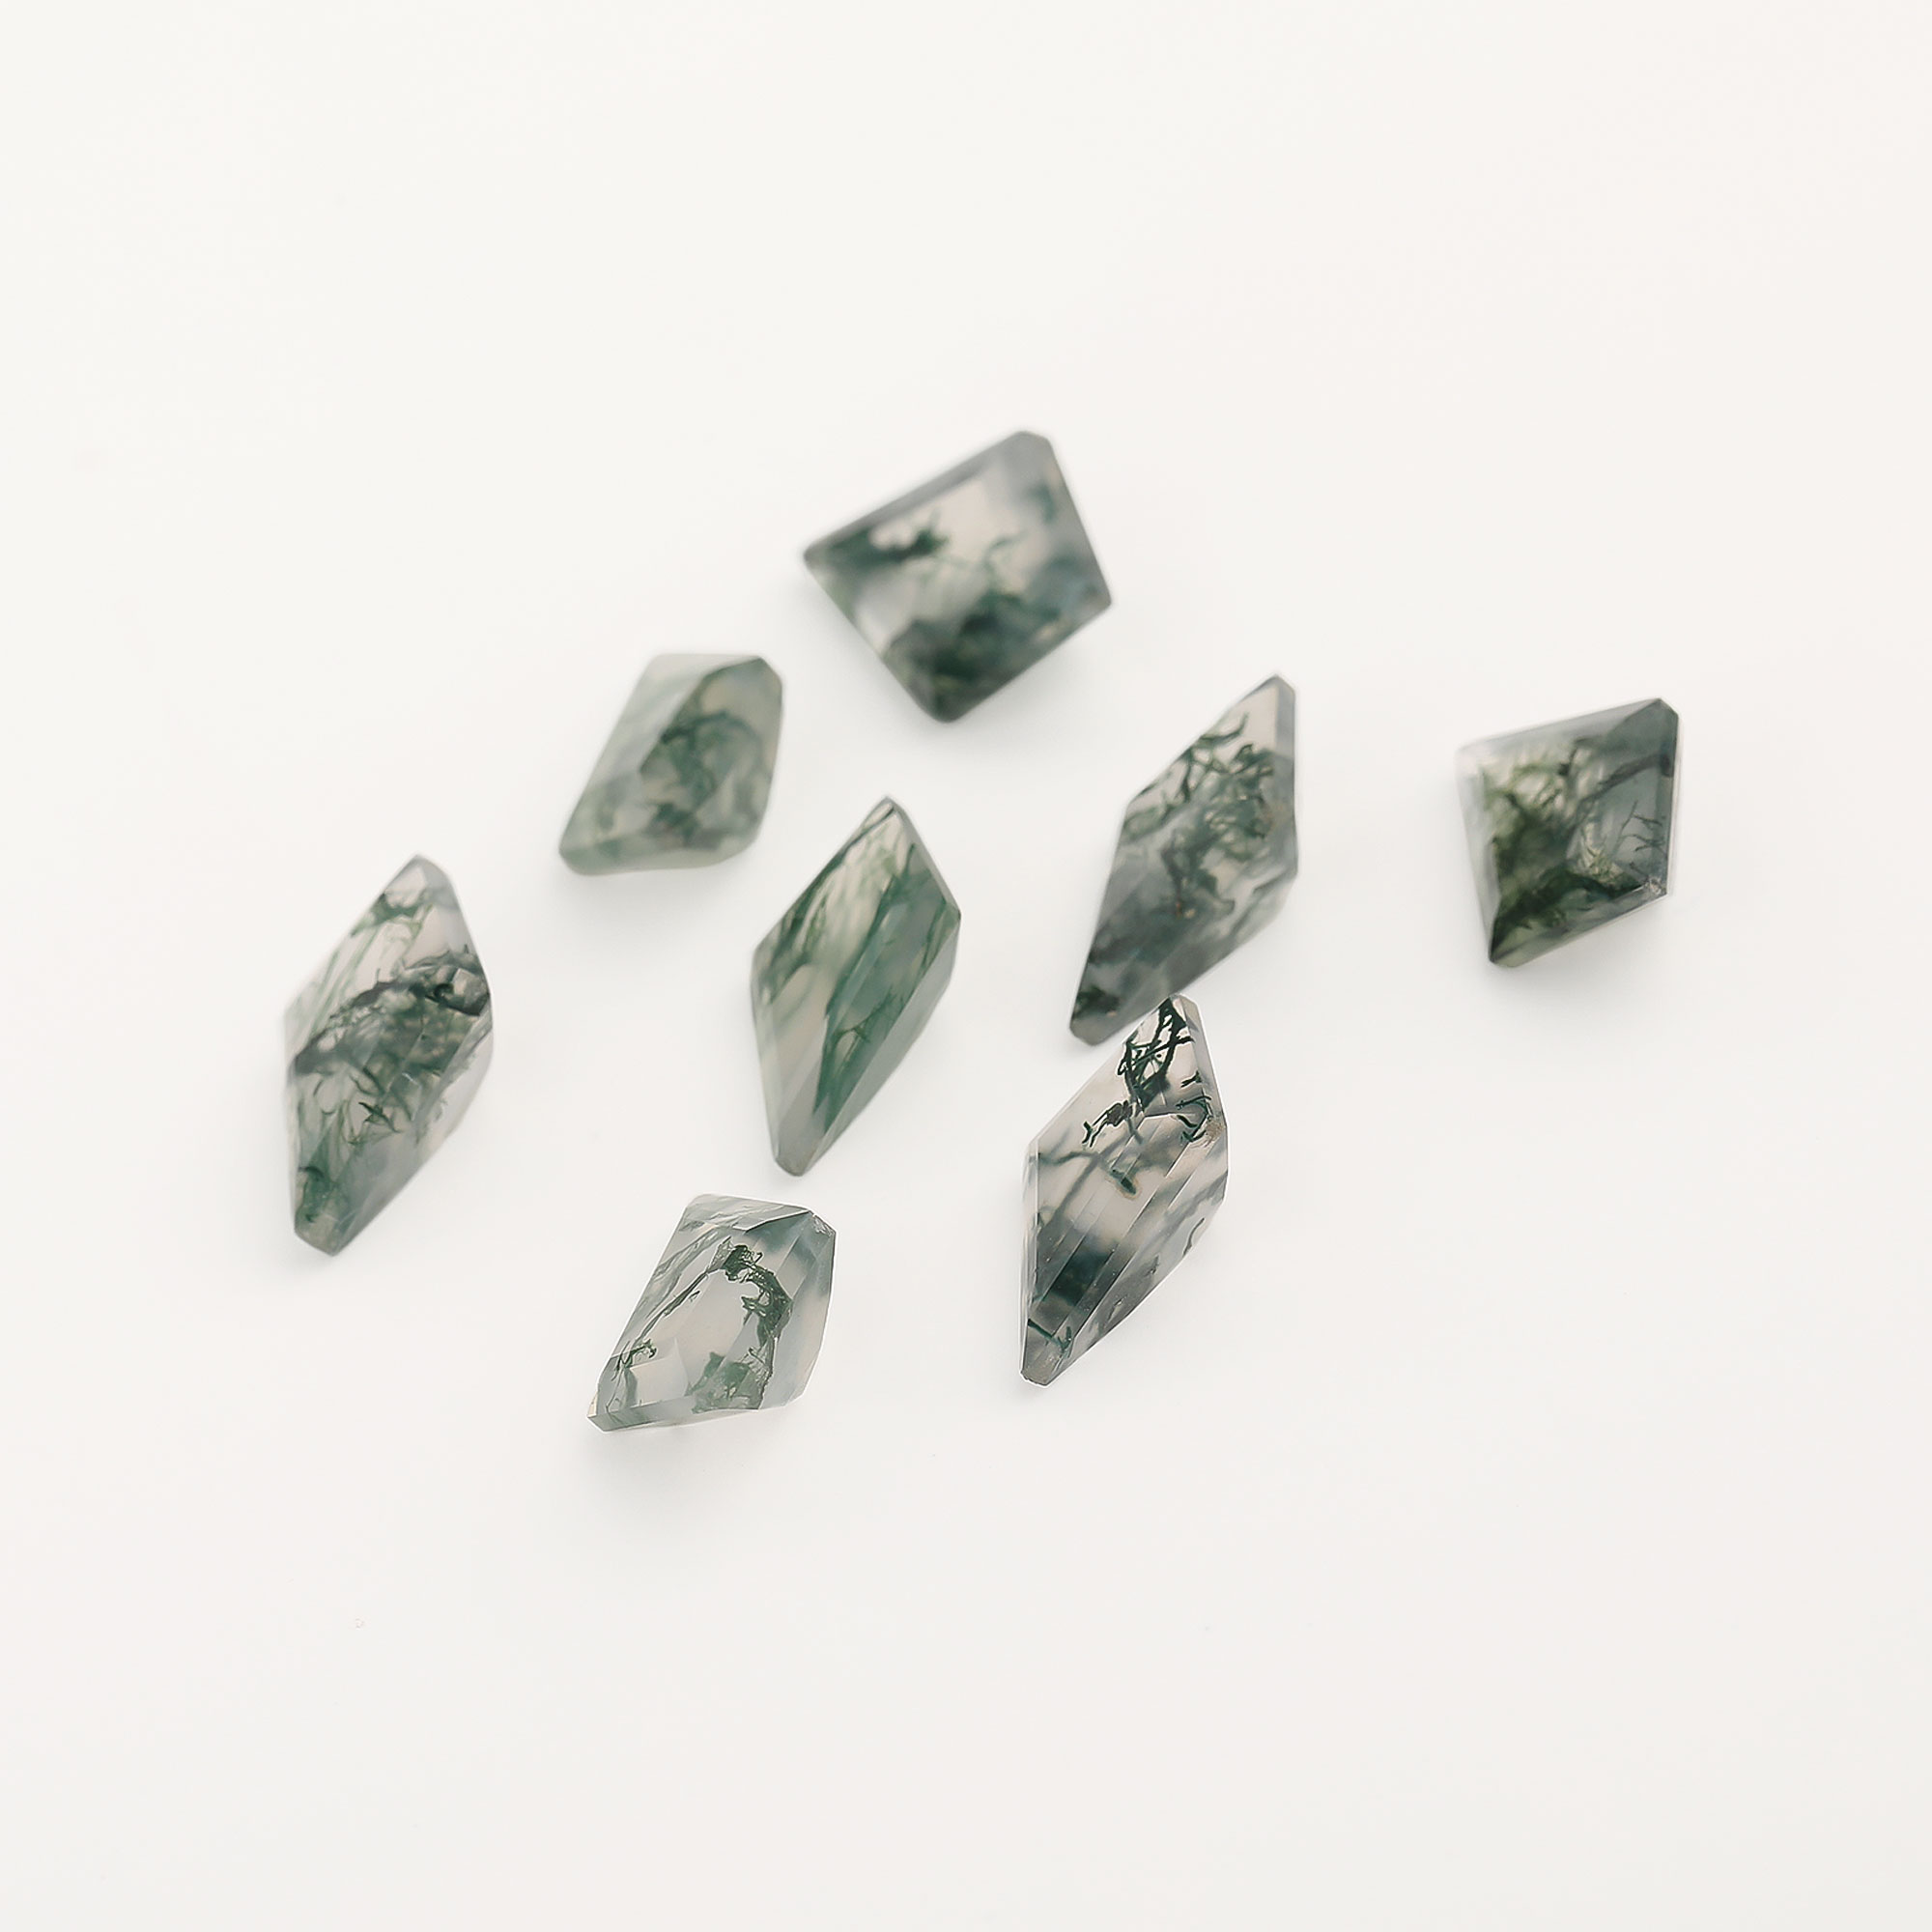 1Pcs 7x10MM Green Moss Agate Kite Cut Faceted Nature Stone,Semi-precious Gemstone,Unique Gemstone,DIY Jewelry Supplies 4160065 - Click Image to Close